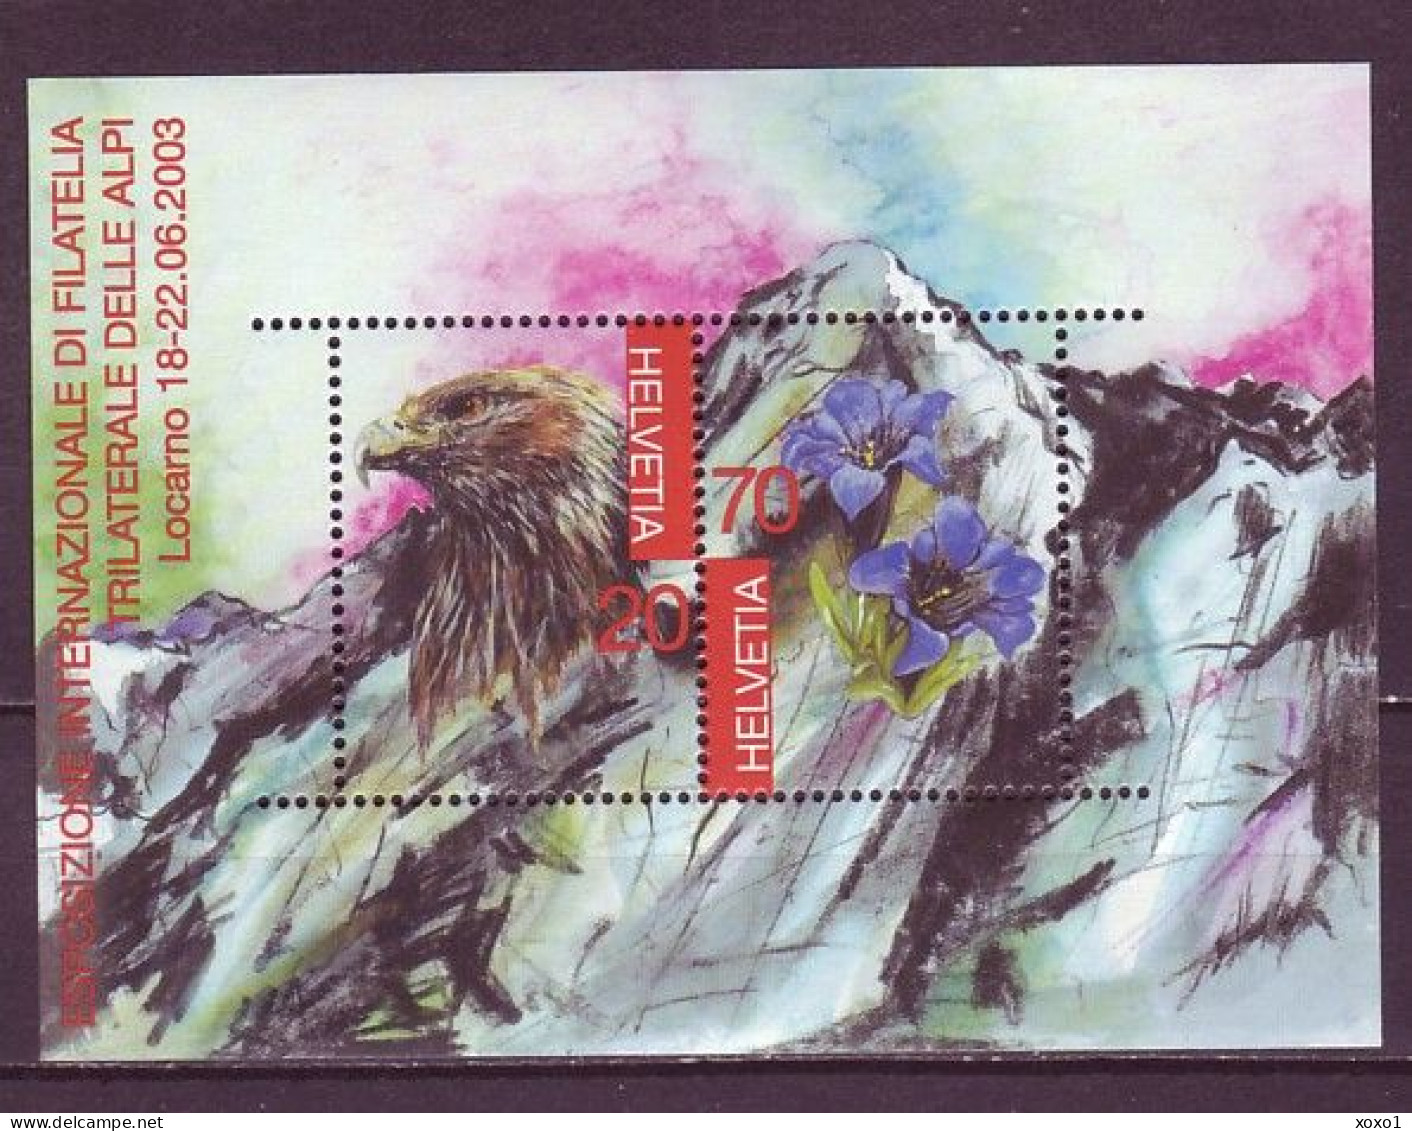 Switzerland 2003 MiNr. 1836 - 1837 (Block 33) Mont Dolent France–Switzerland–Italy Border Triangle S\sh MNH** 2.00 € - Berge